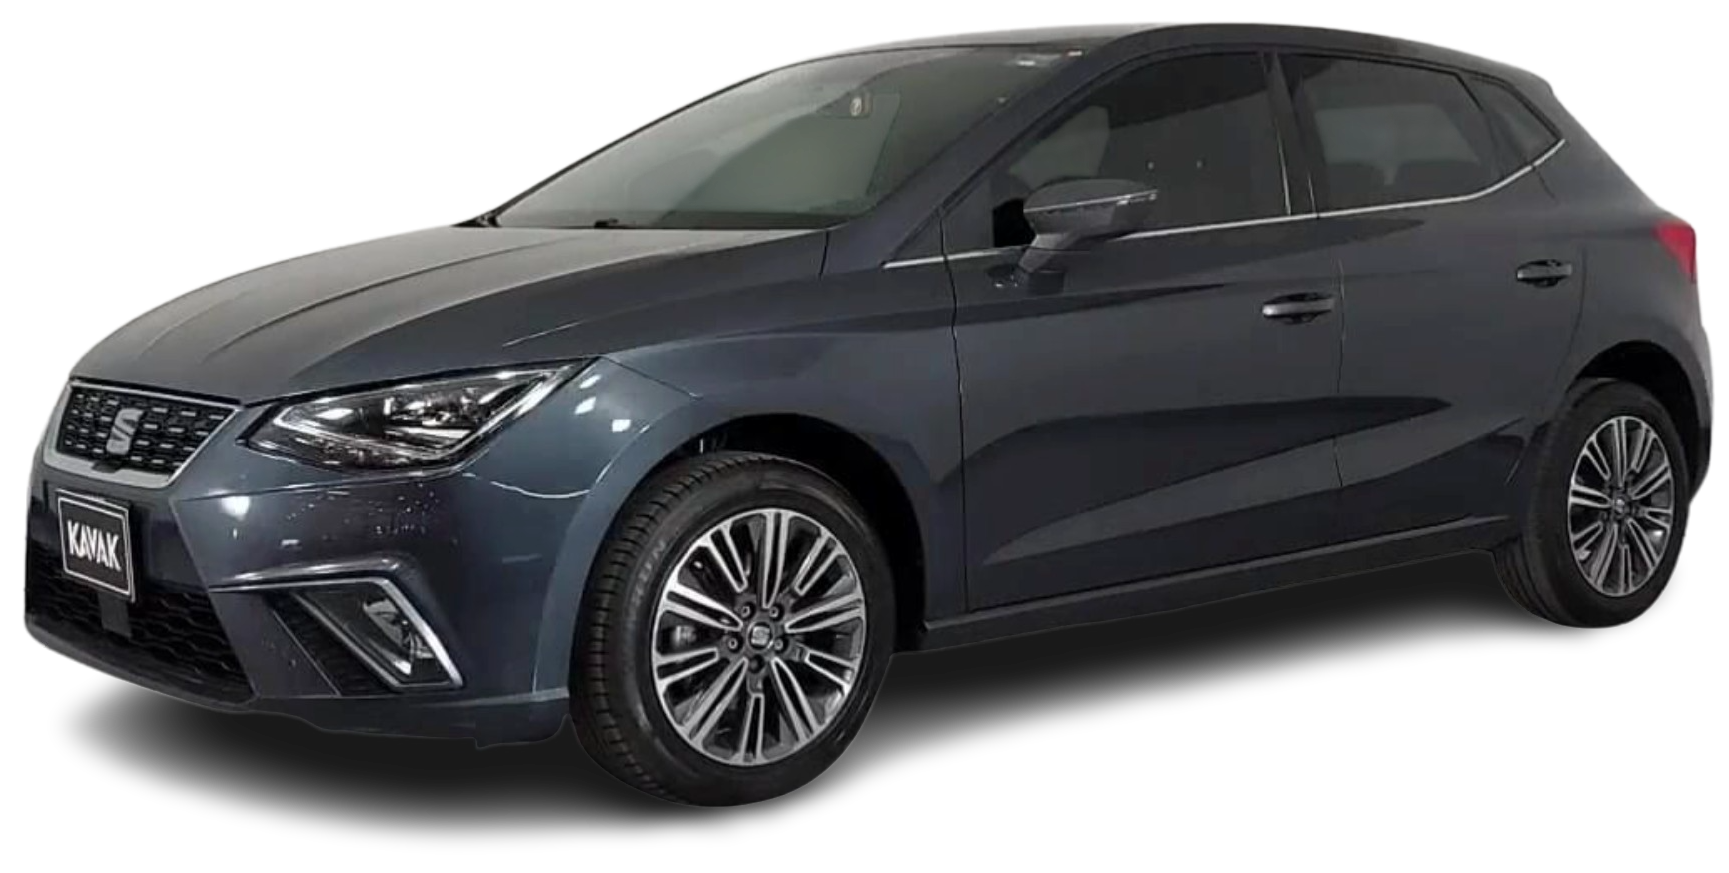 Seat Ibiza Hatchback 2022 2021 2020 2019 2018